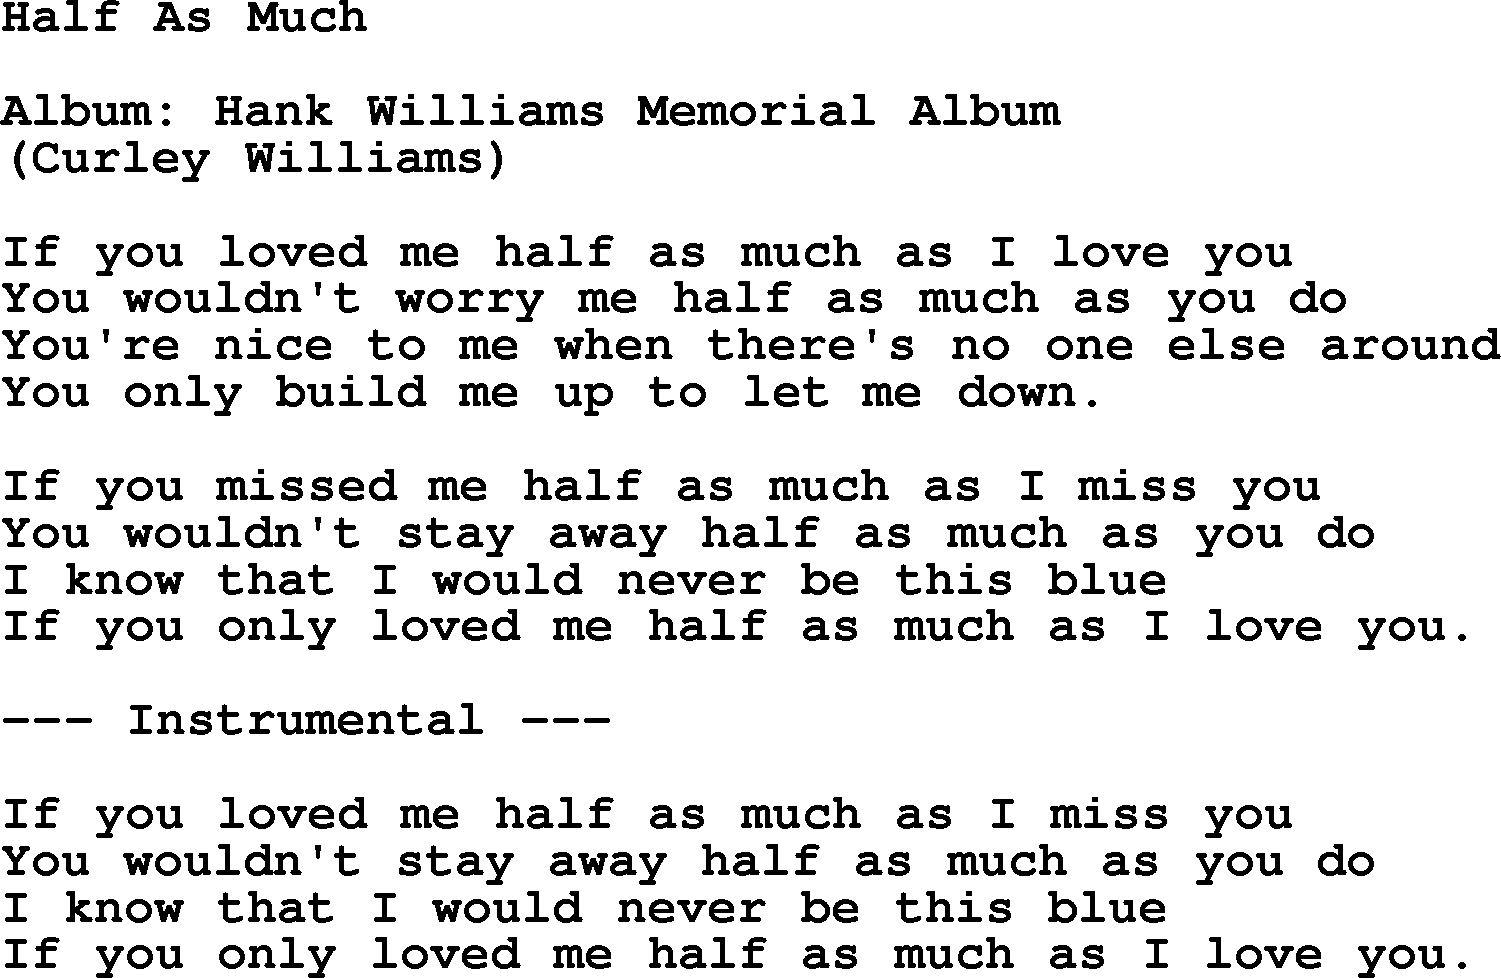 Hank Williams song Half As Much, lyrics